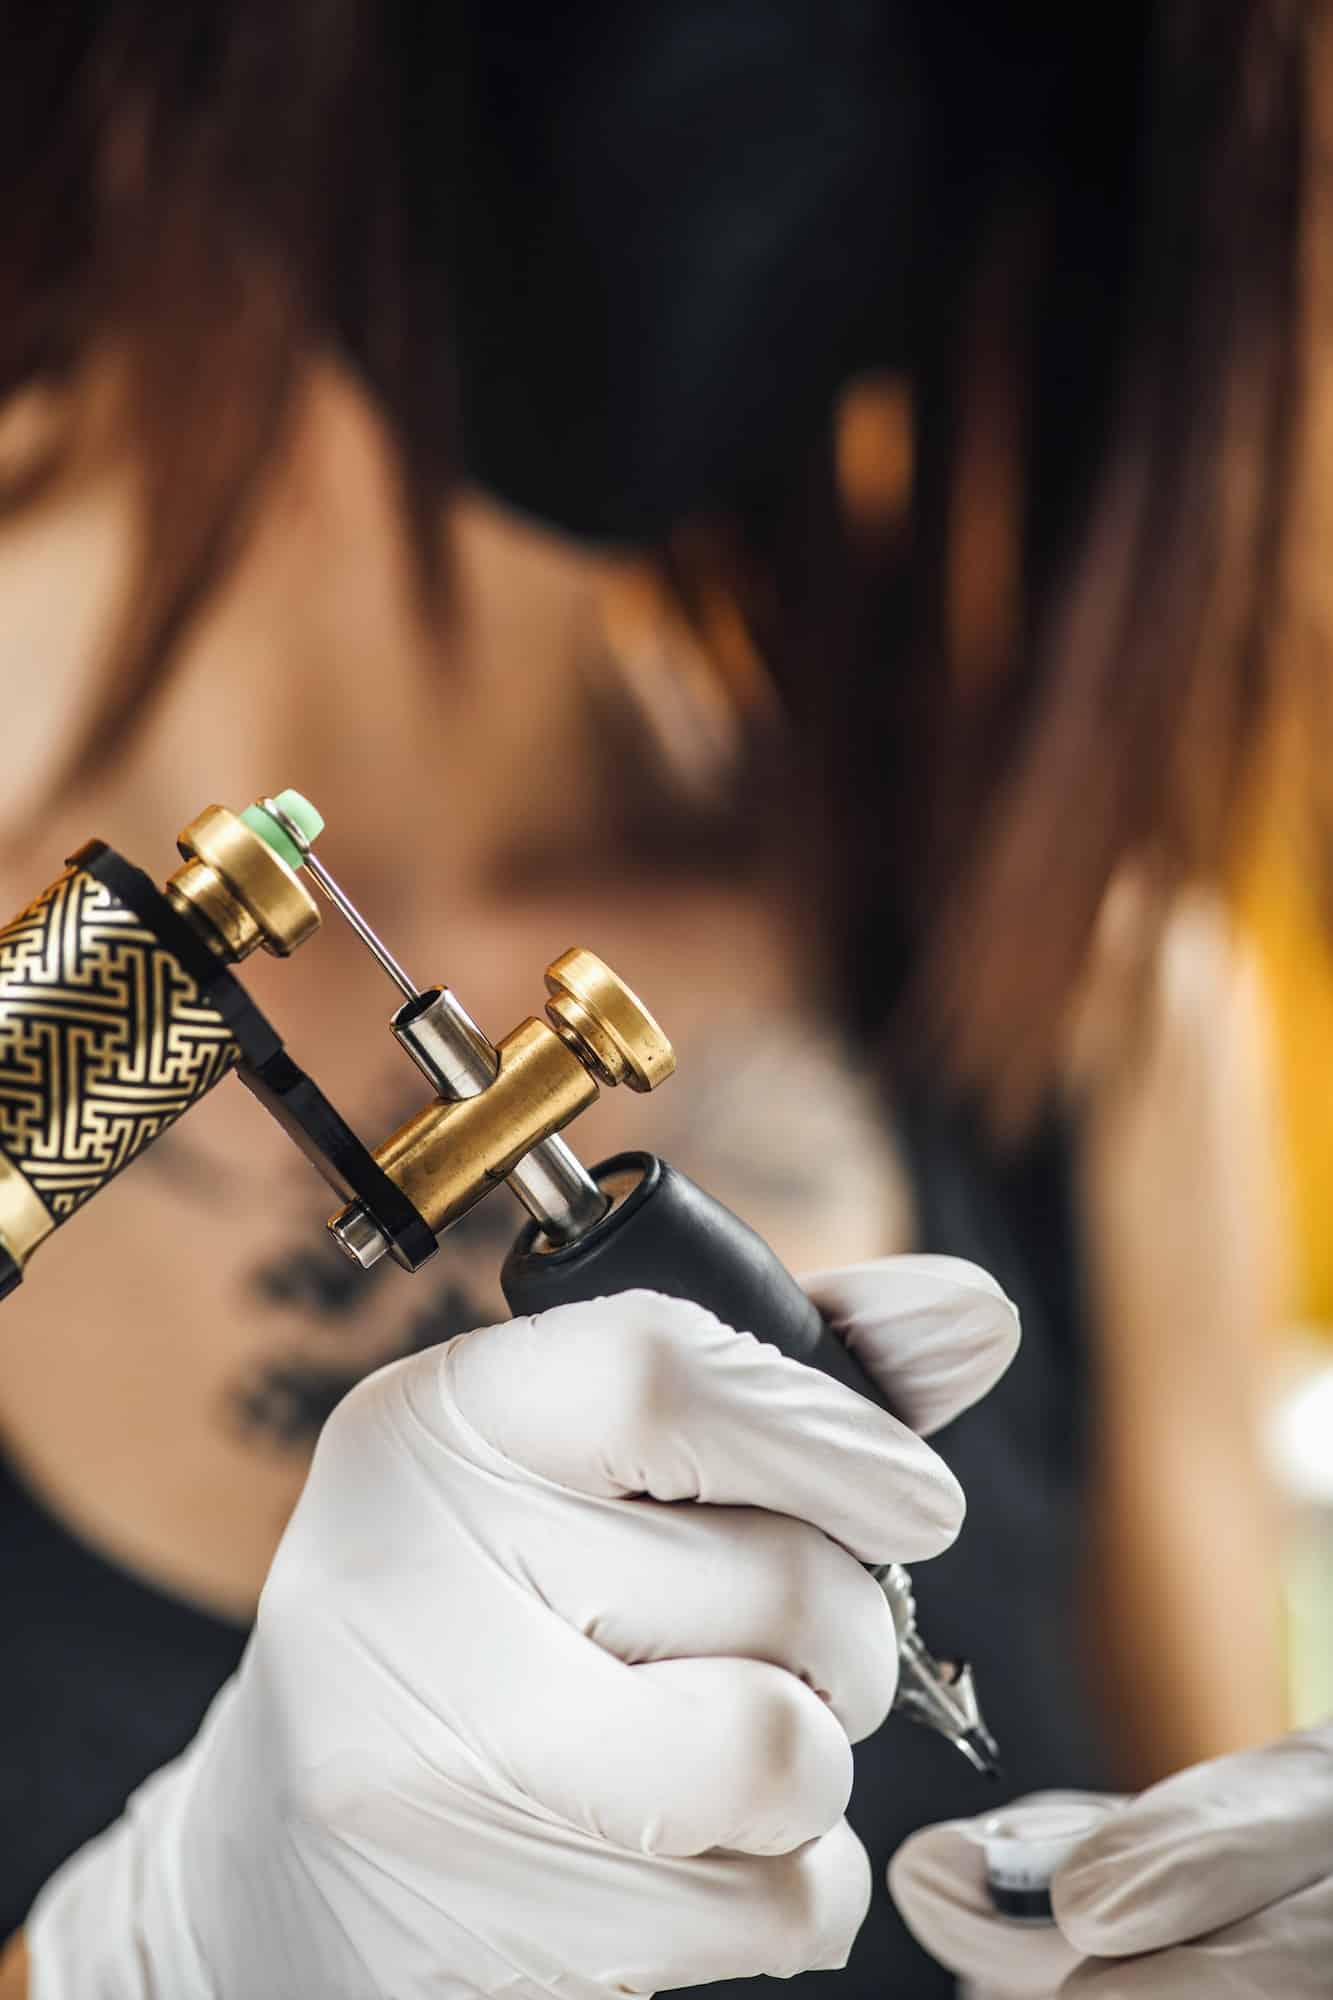 Female Tattoo Artist Prepares Tattoo Machine for Making a Tattoo on a Men’s Arm